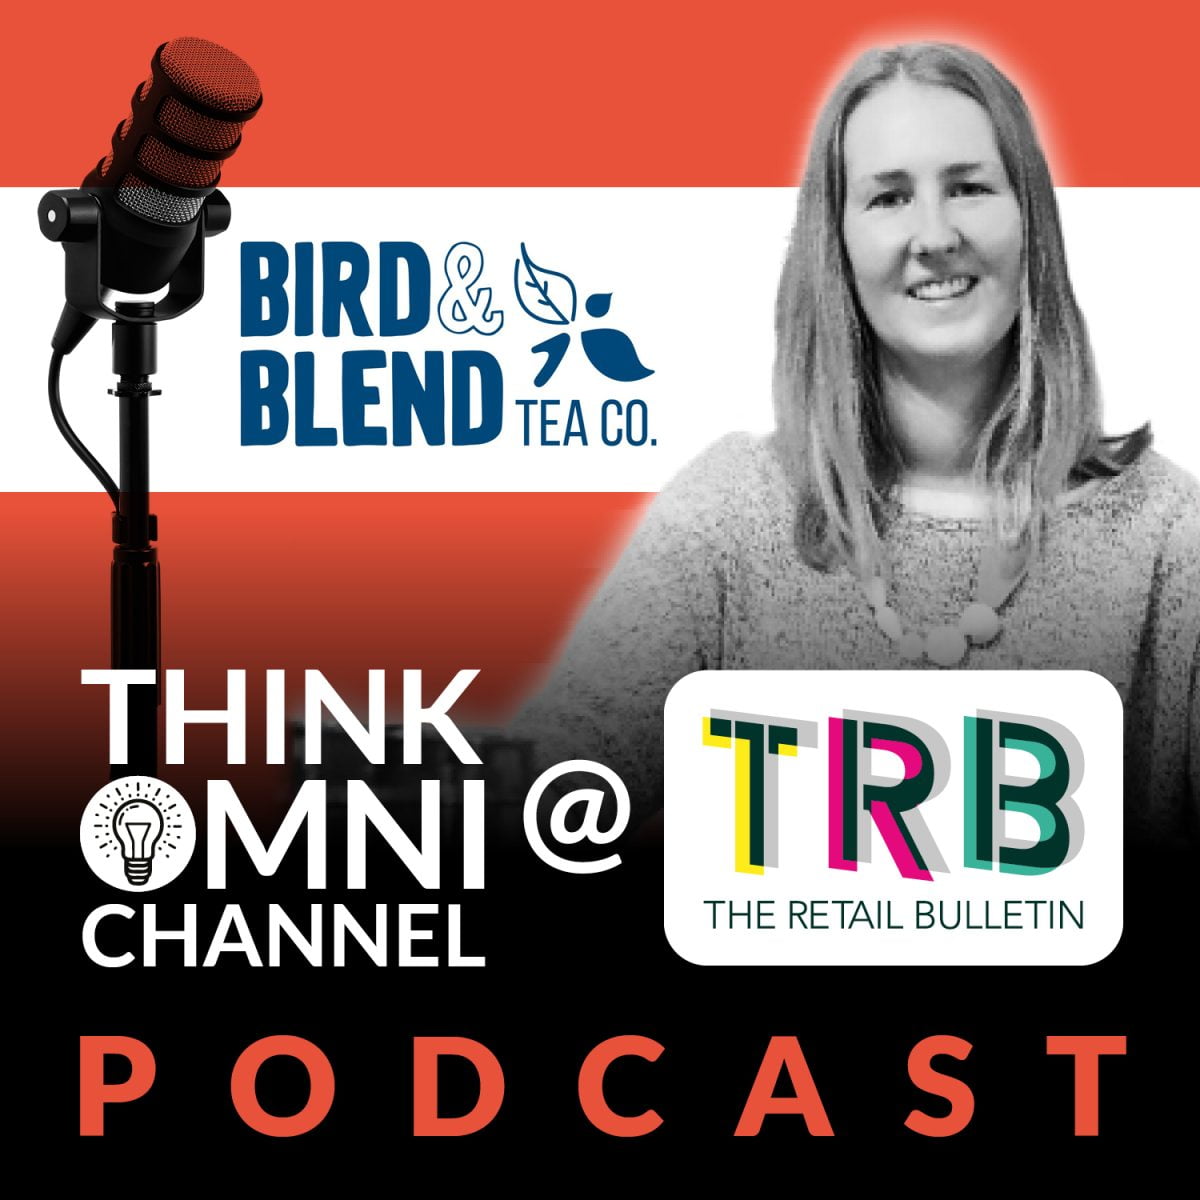 Krisi Smith - Bird & Blend Tea